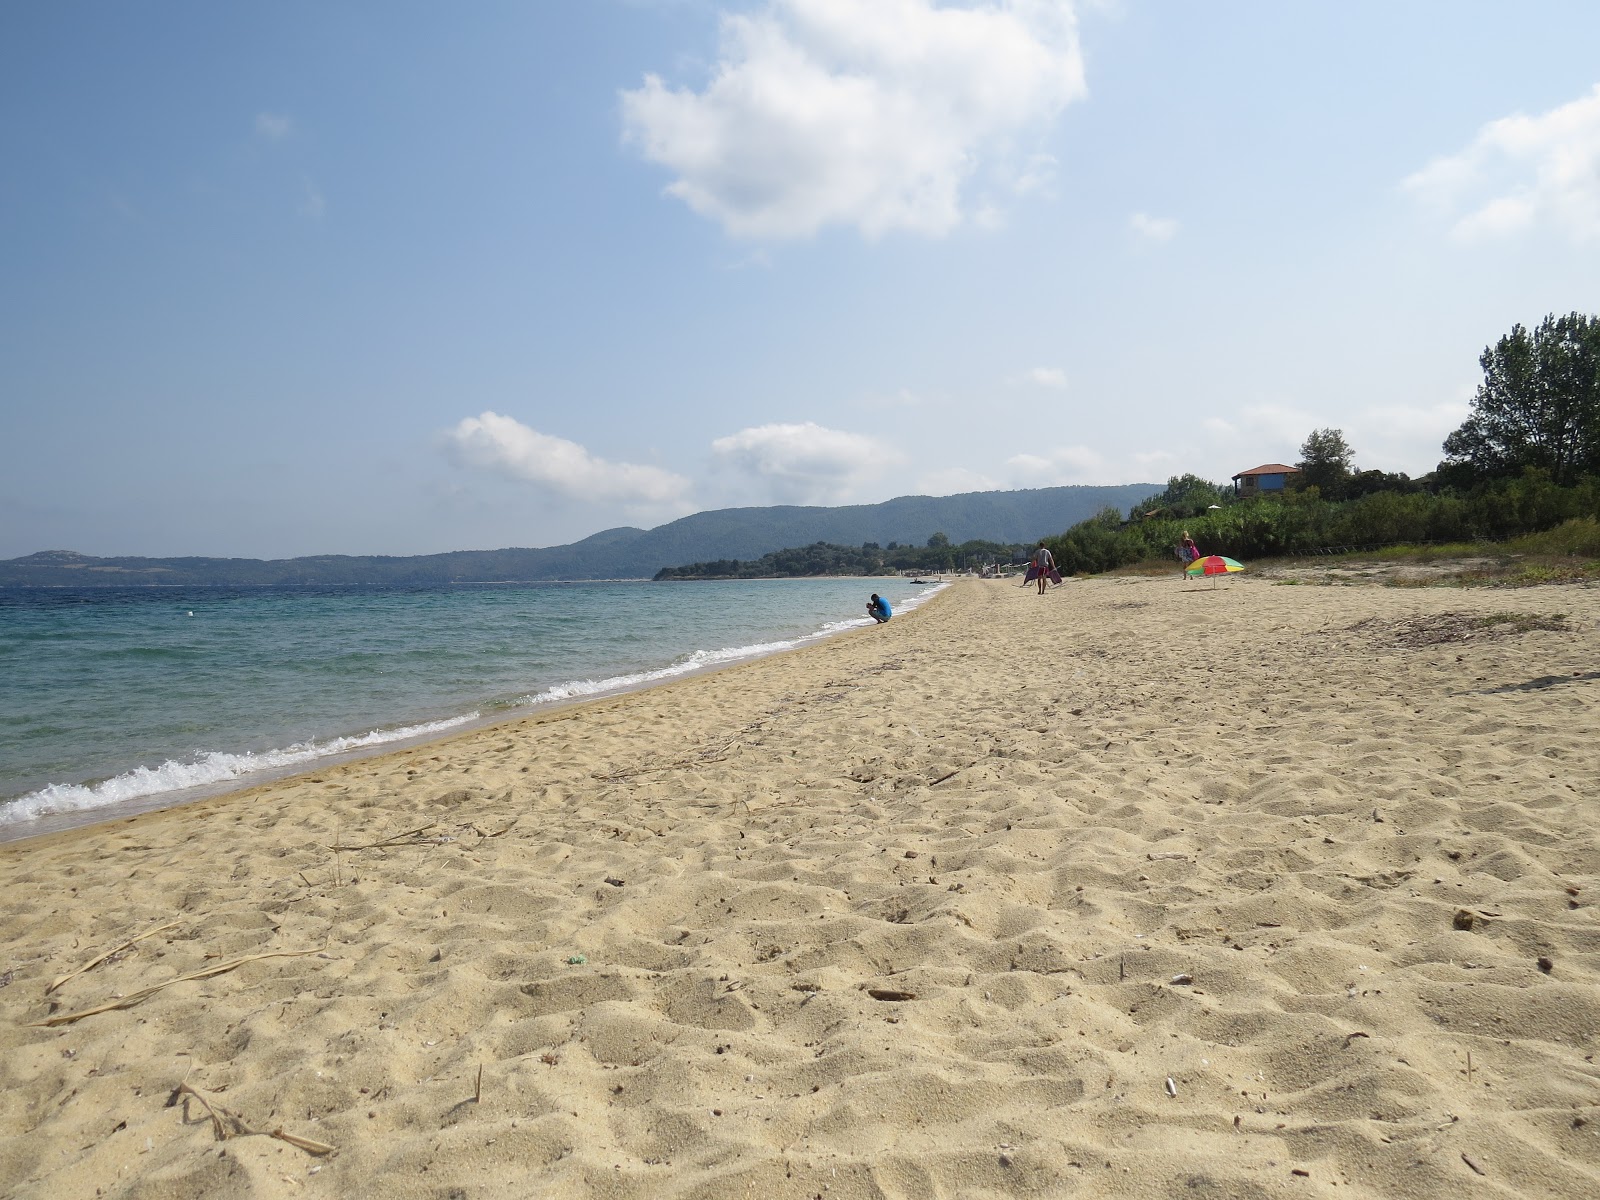 Foto di Koumitsa Beach ubicato in zona naturale